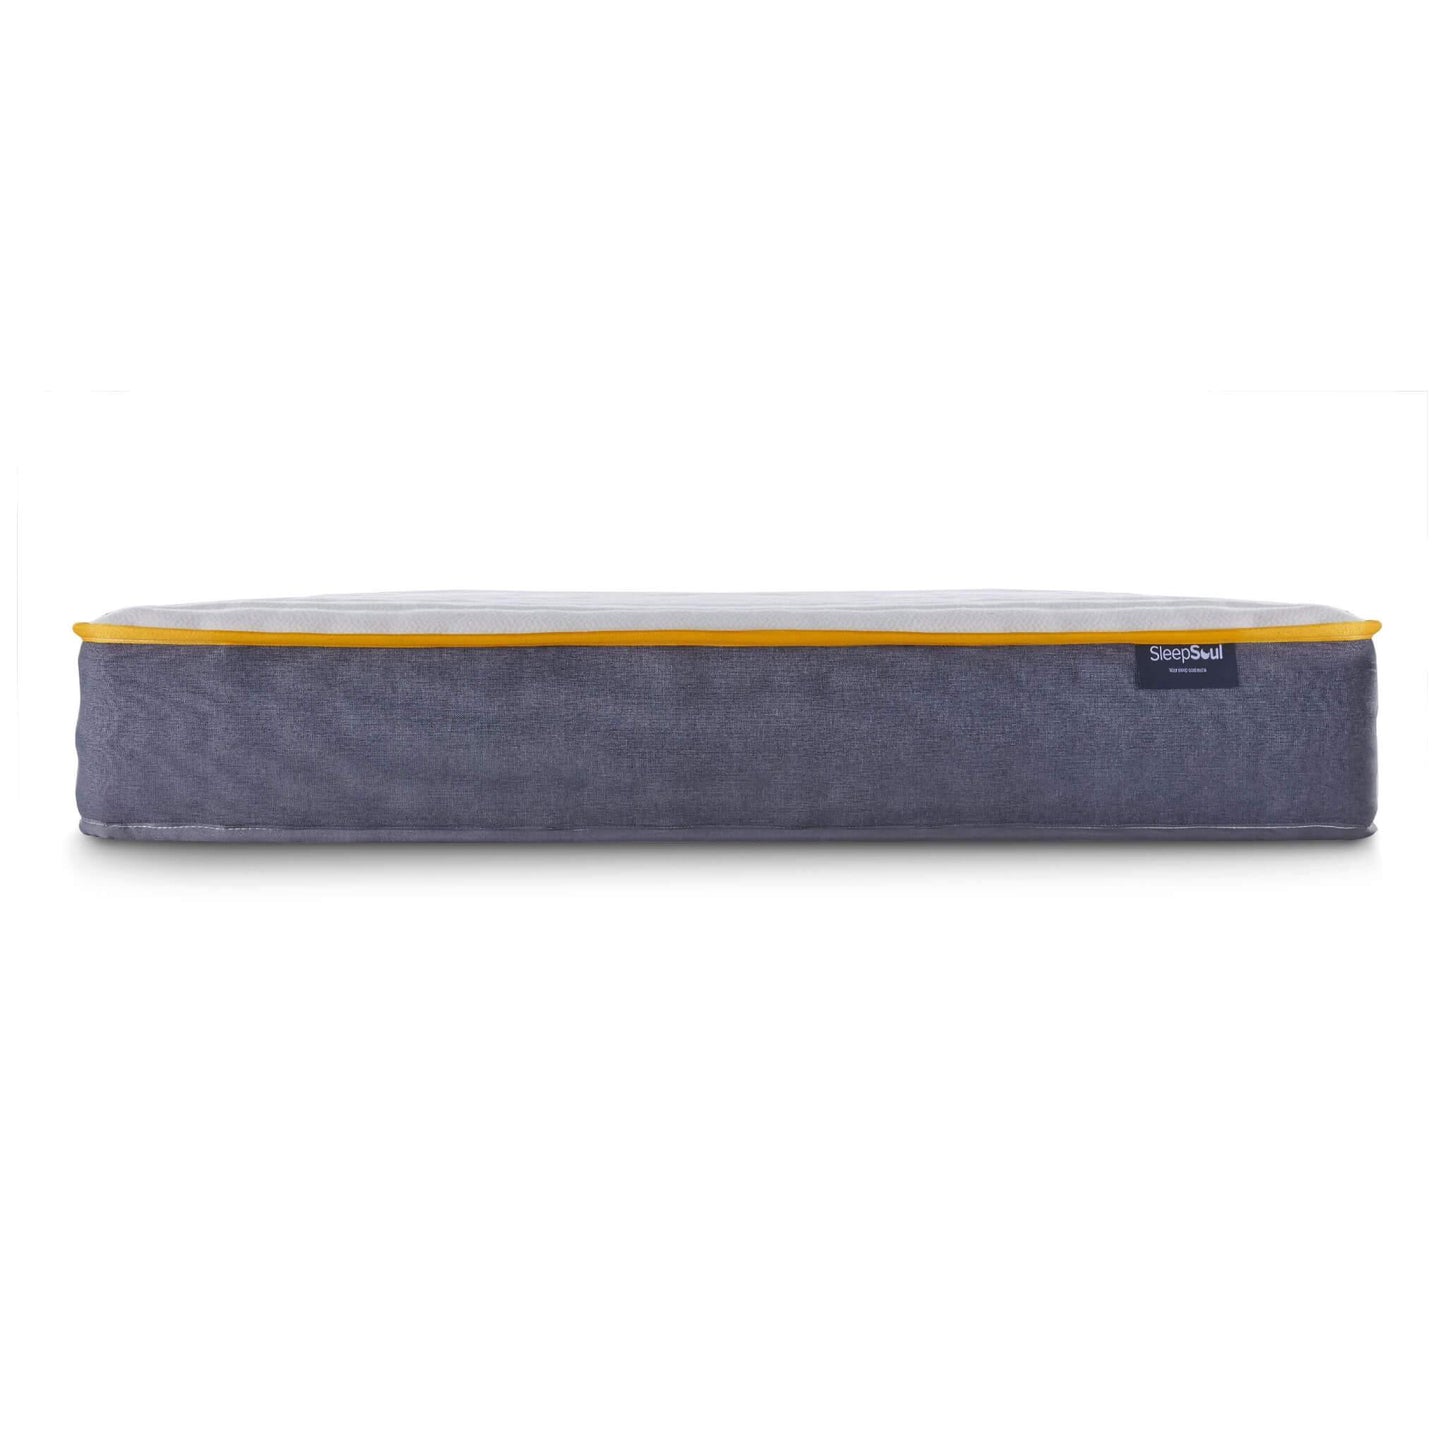 SleepSoul balance 800 pocket spring and memory foam standard single mattress profile